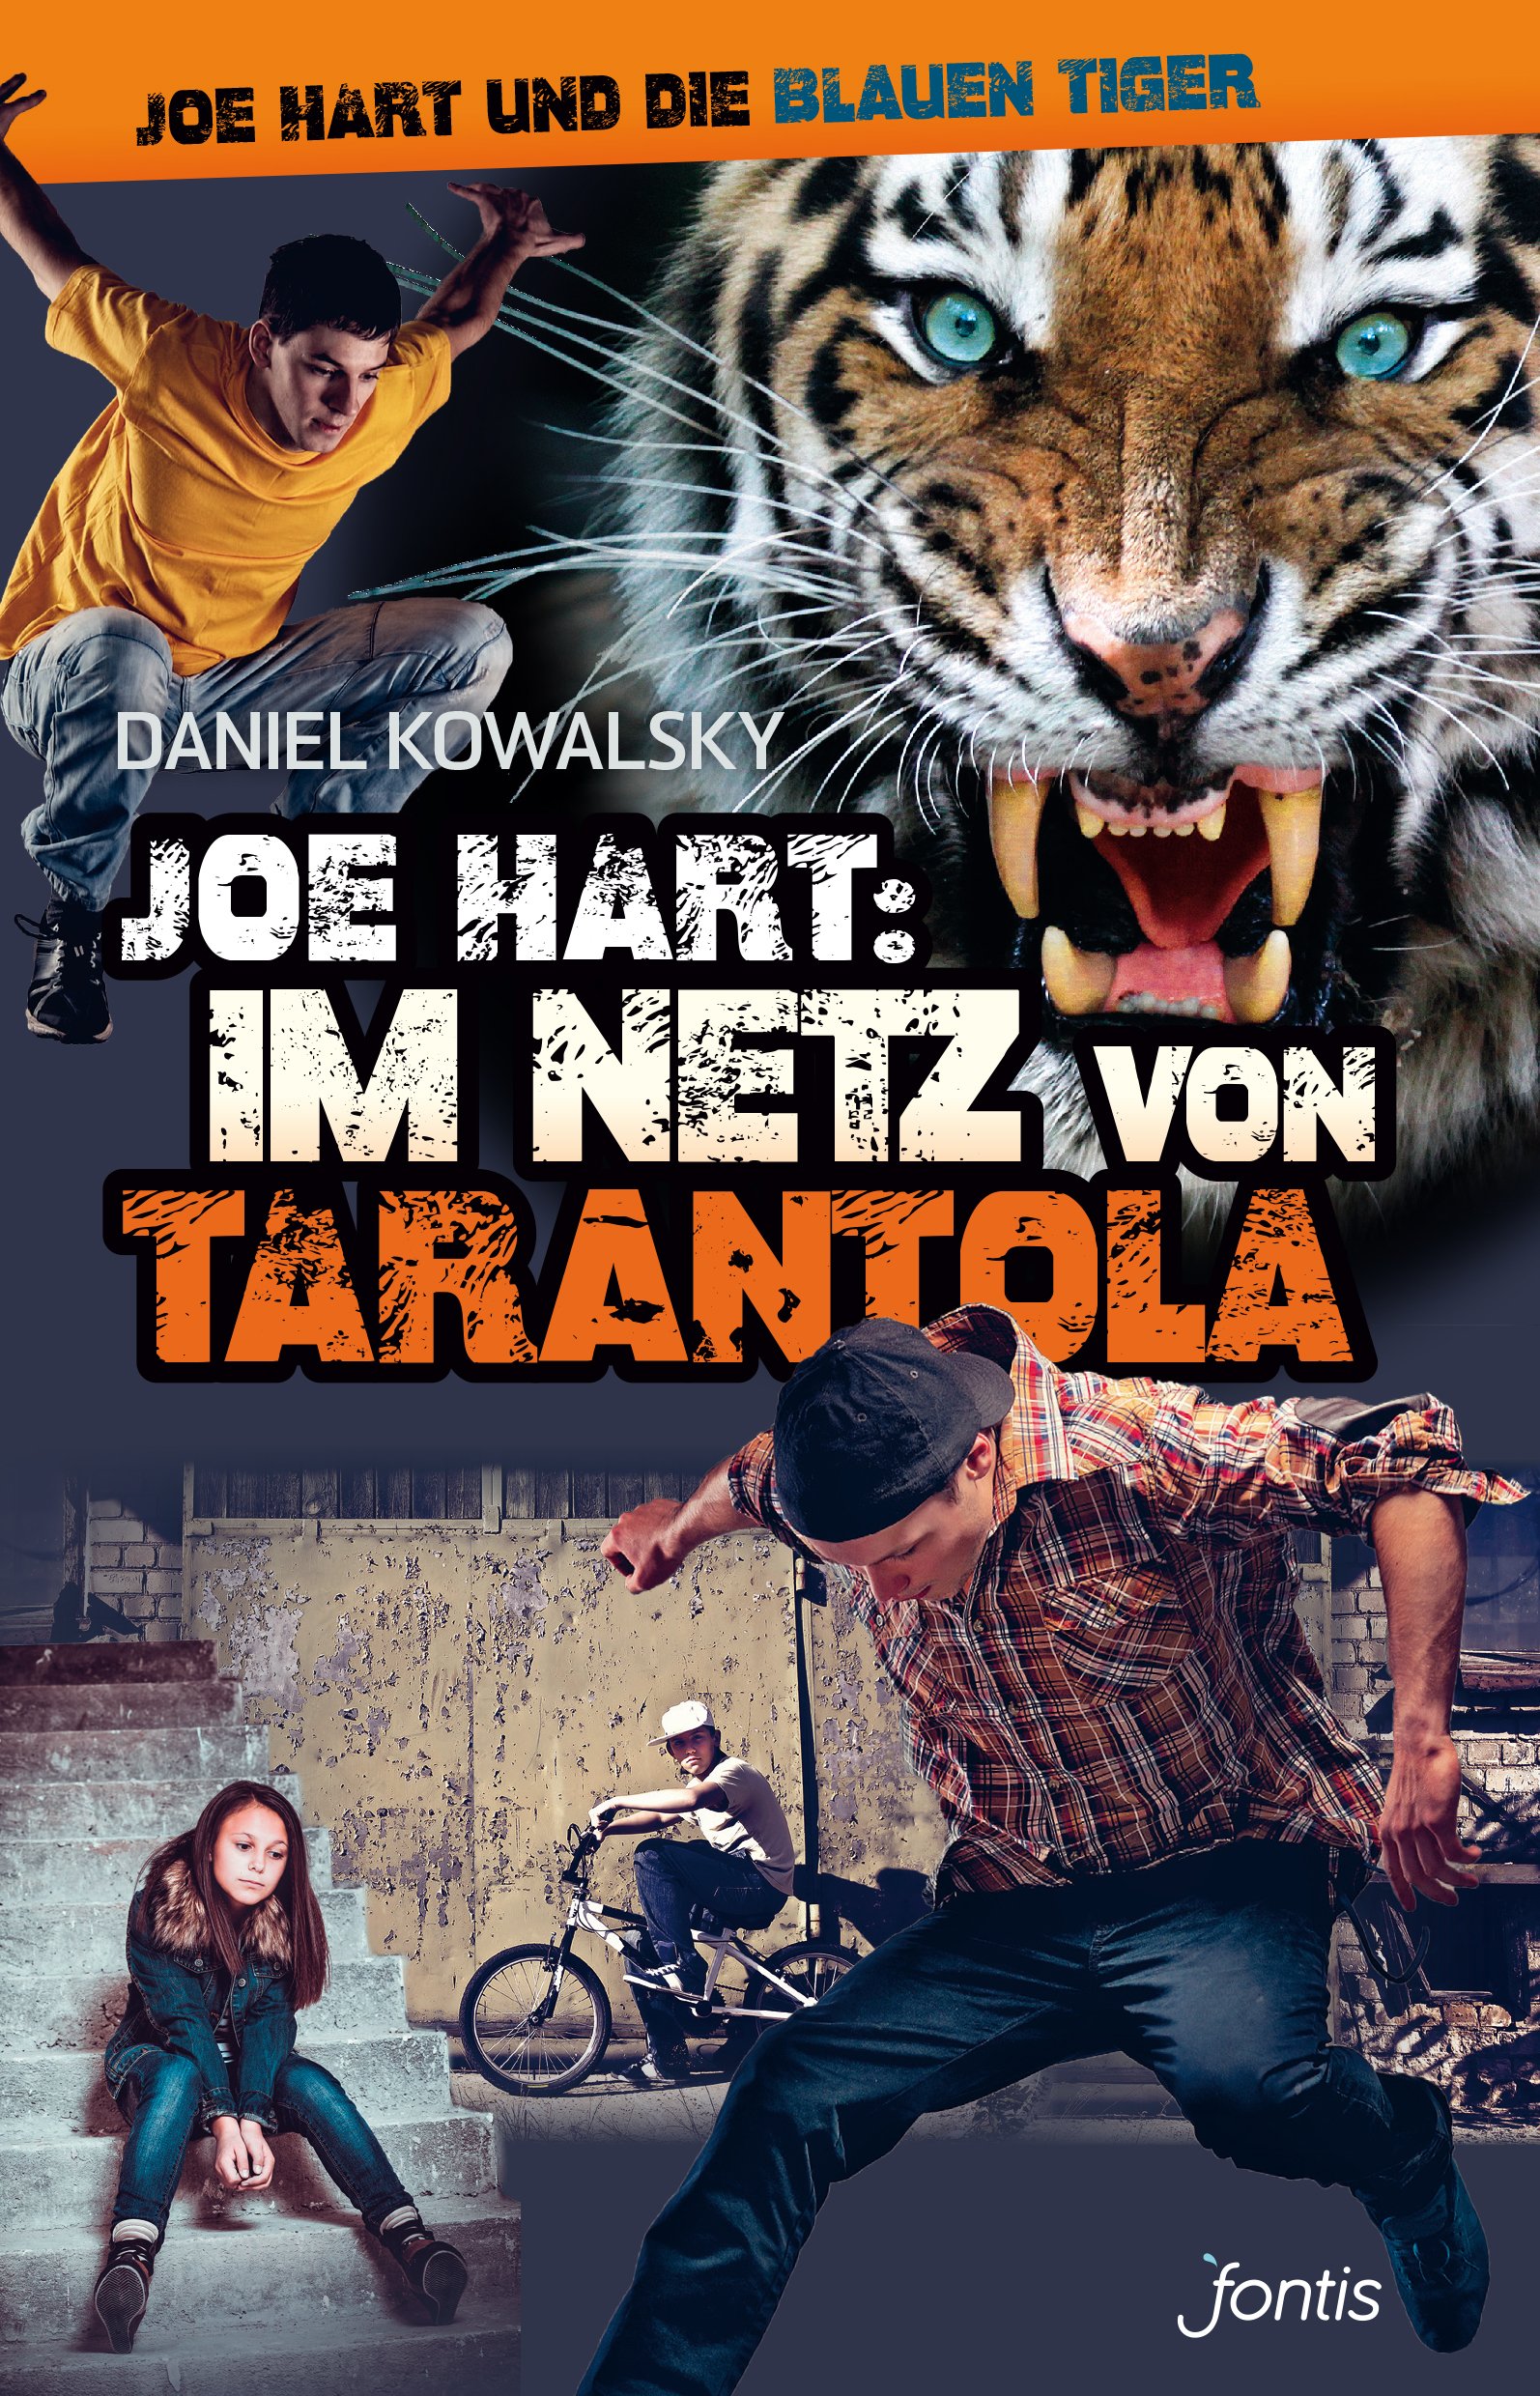 Joe Hart 5: Im Netz von Tarantola